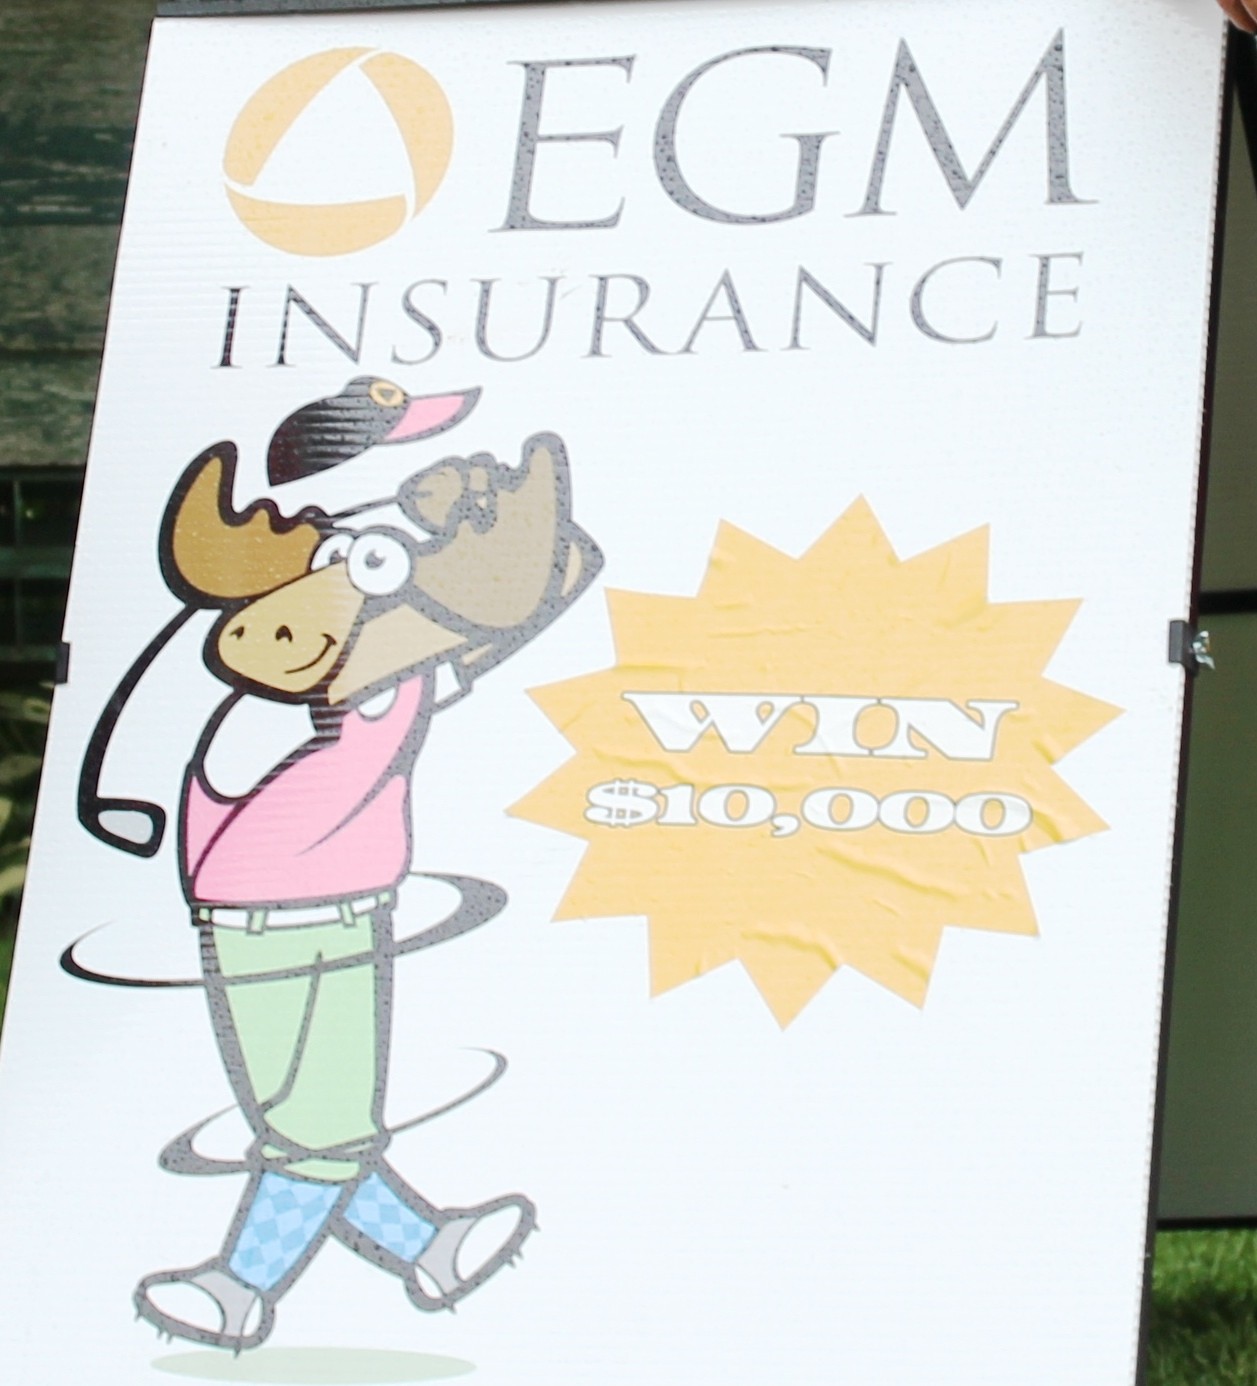 <b>EGM Insurance Sponsors the 10,000 Hole</b>